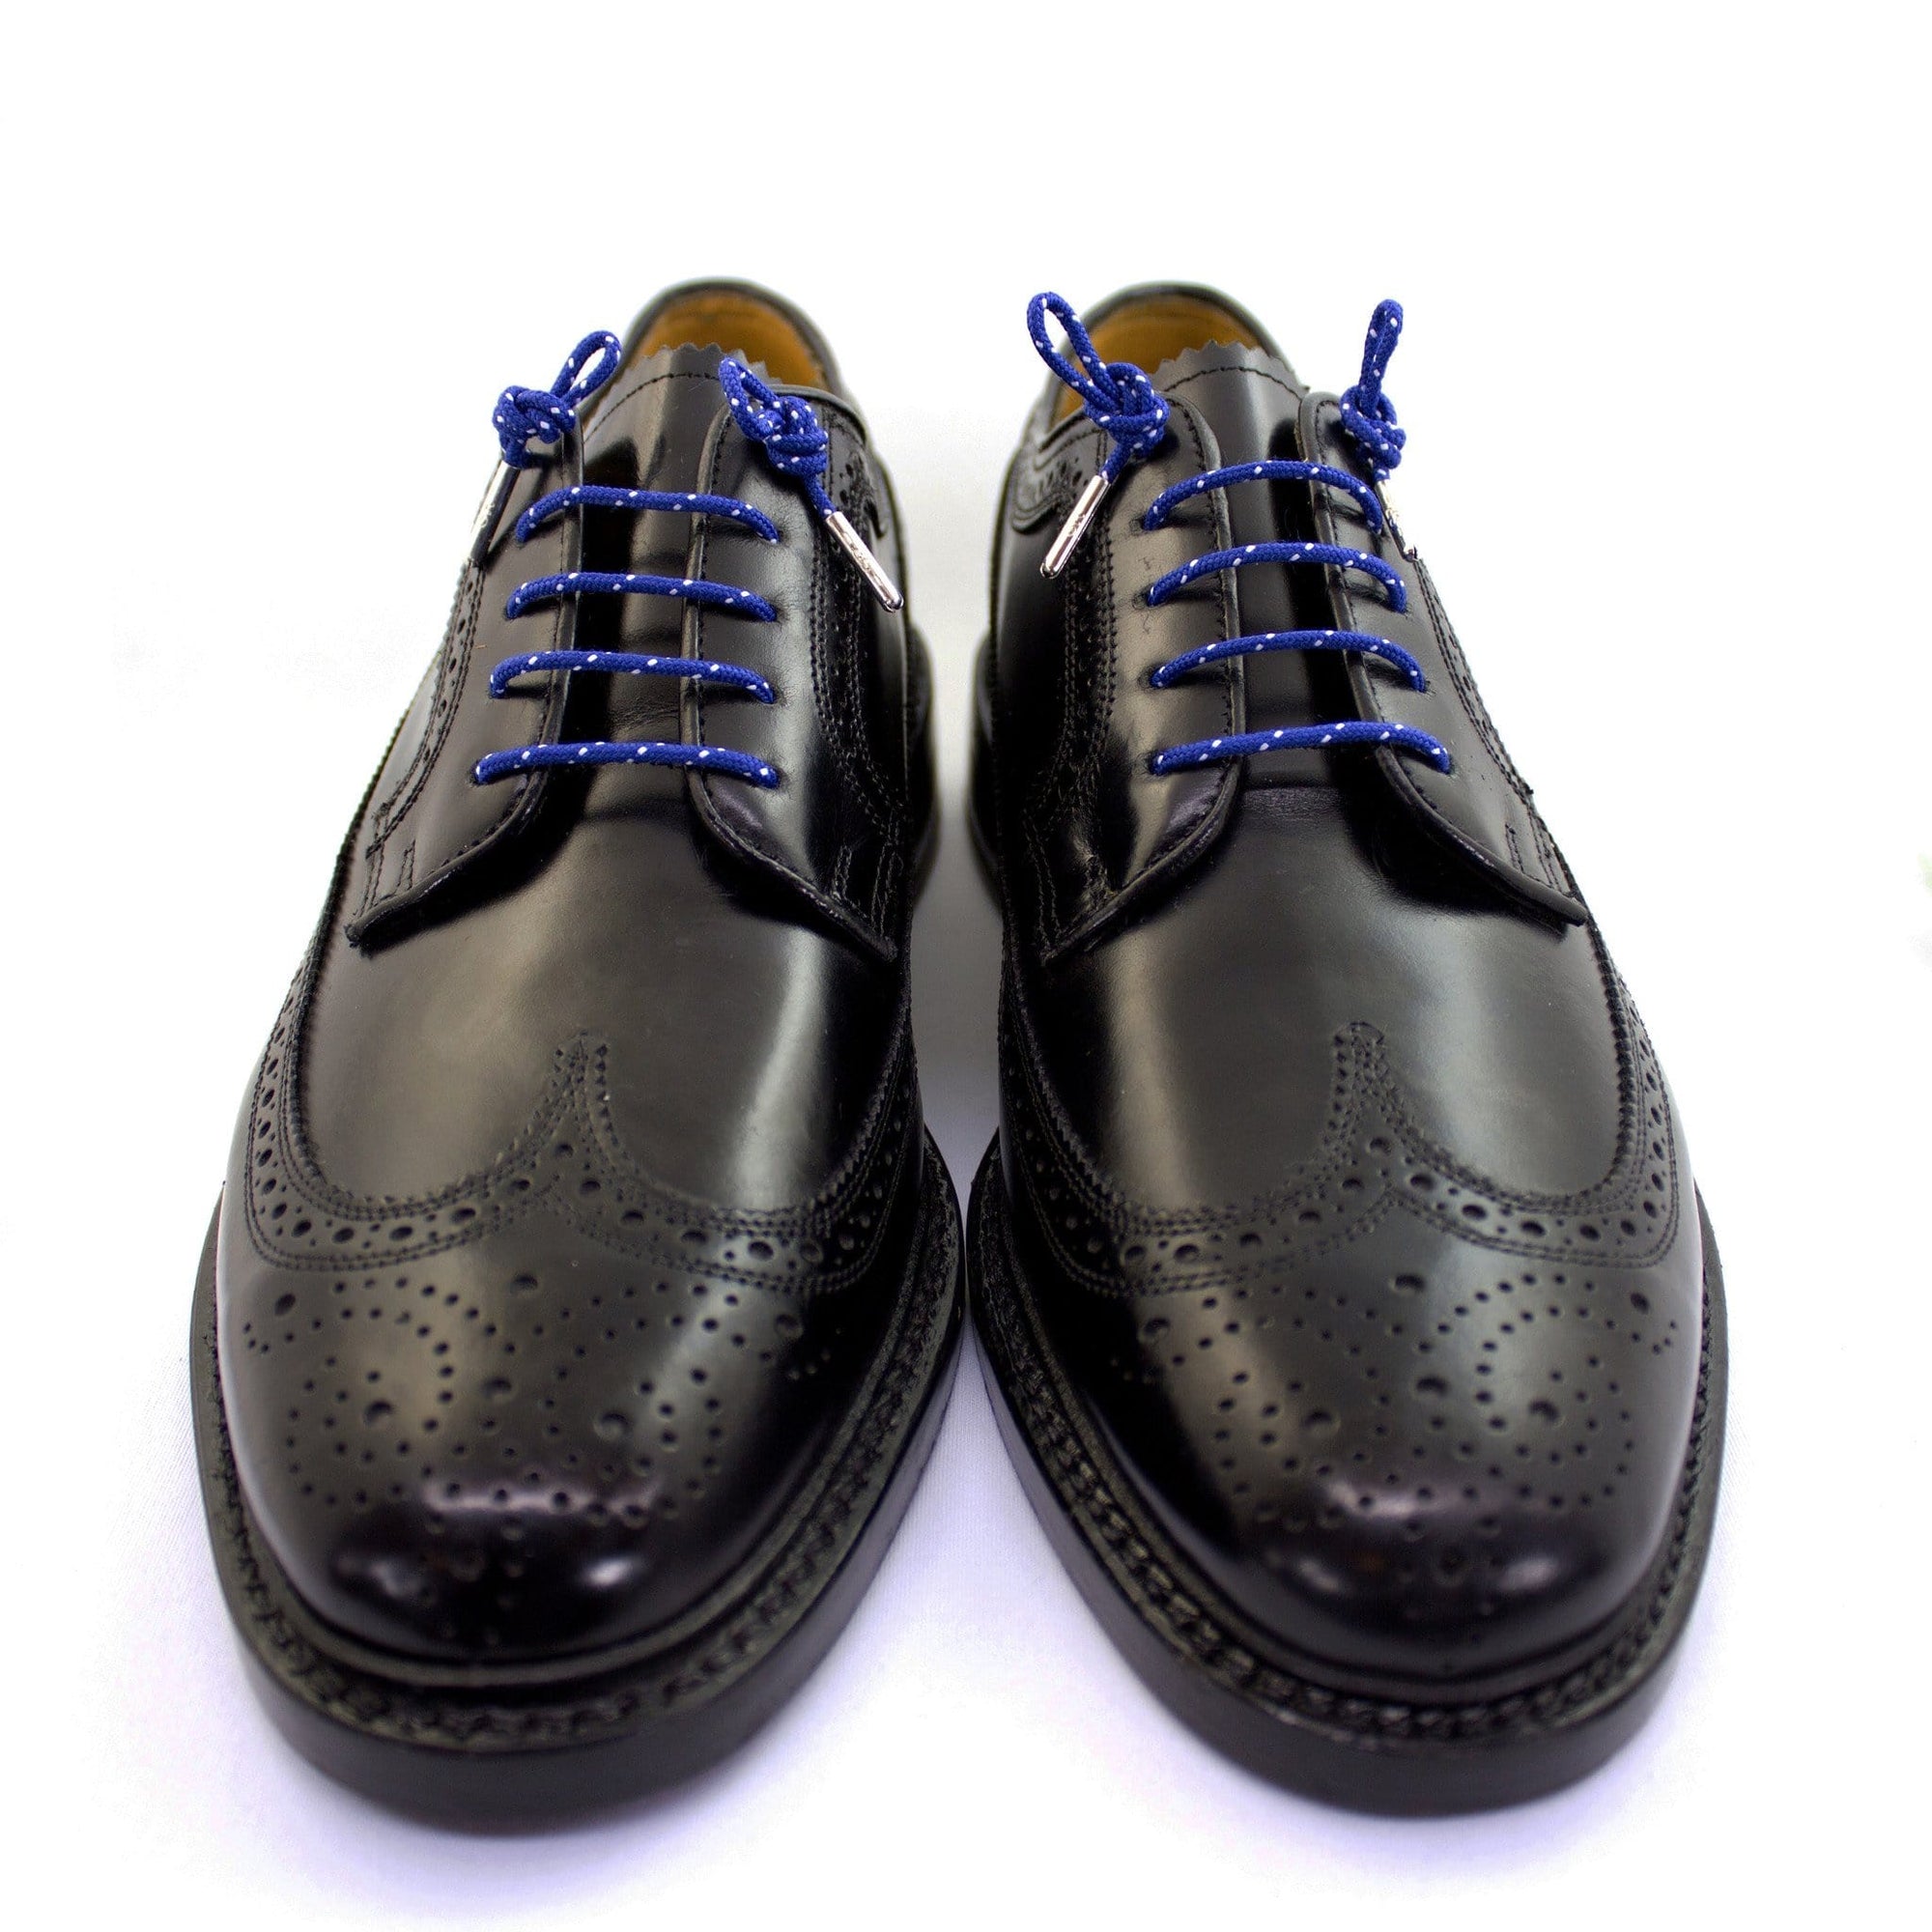 Royal blue and white dots laces for dress shoes, Length: 32"/81cm-Stolen Riches